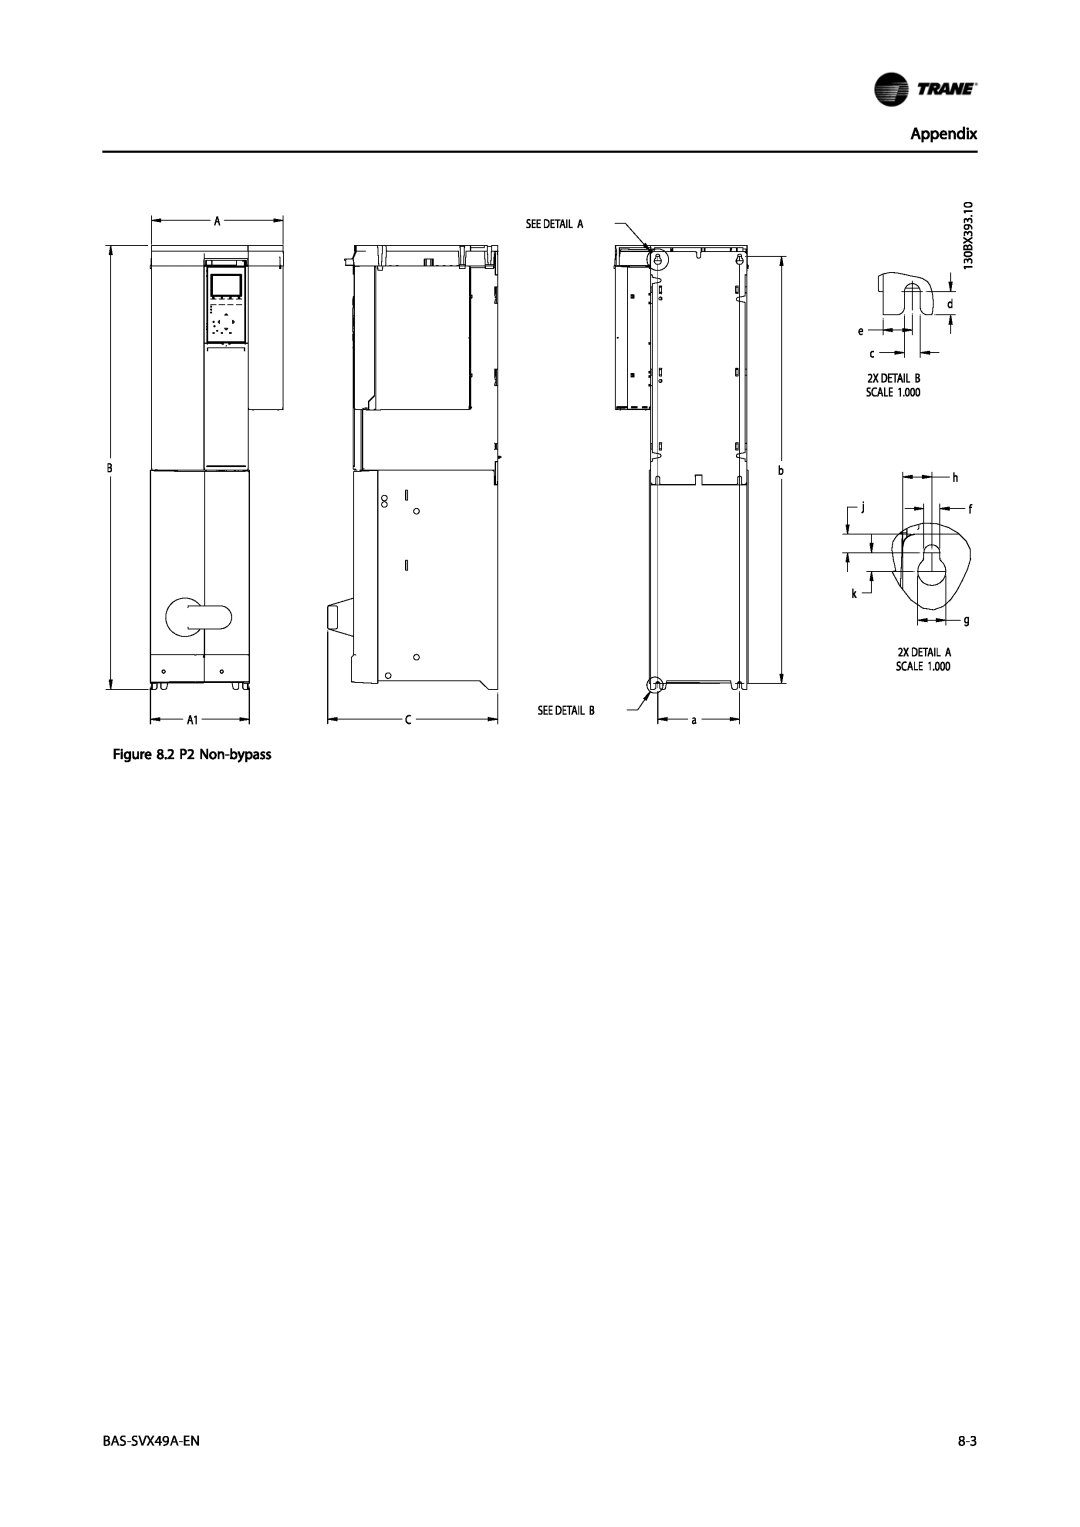 Trane Vertical Bypass/Non Bypass Panel, TR200 specifications Appendix, 2 P2 Non-bypass, BAS-SVX49A-EN 